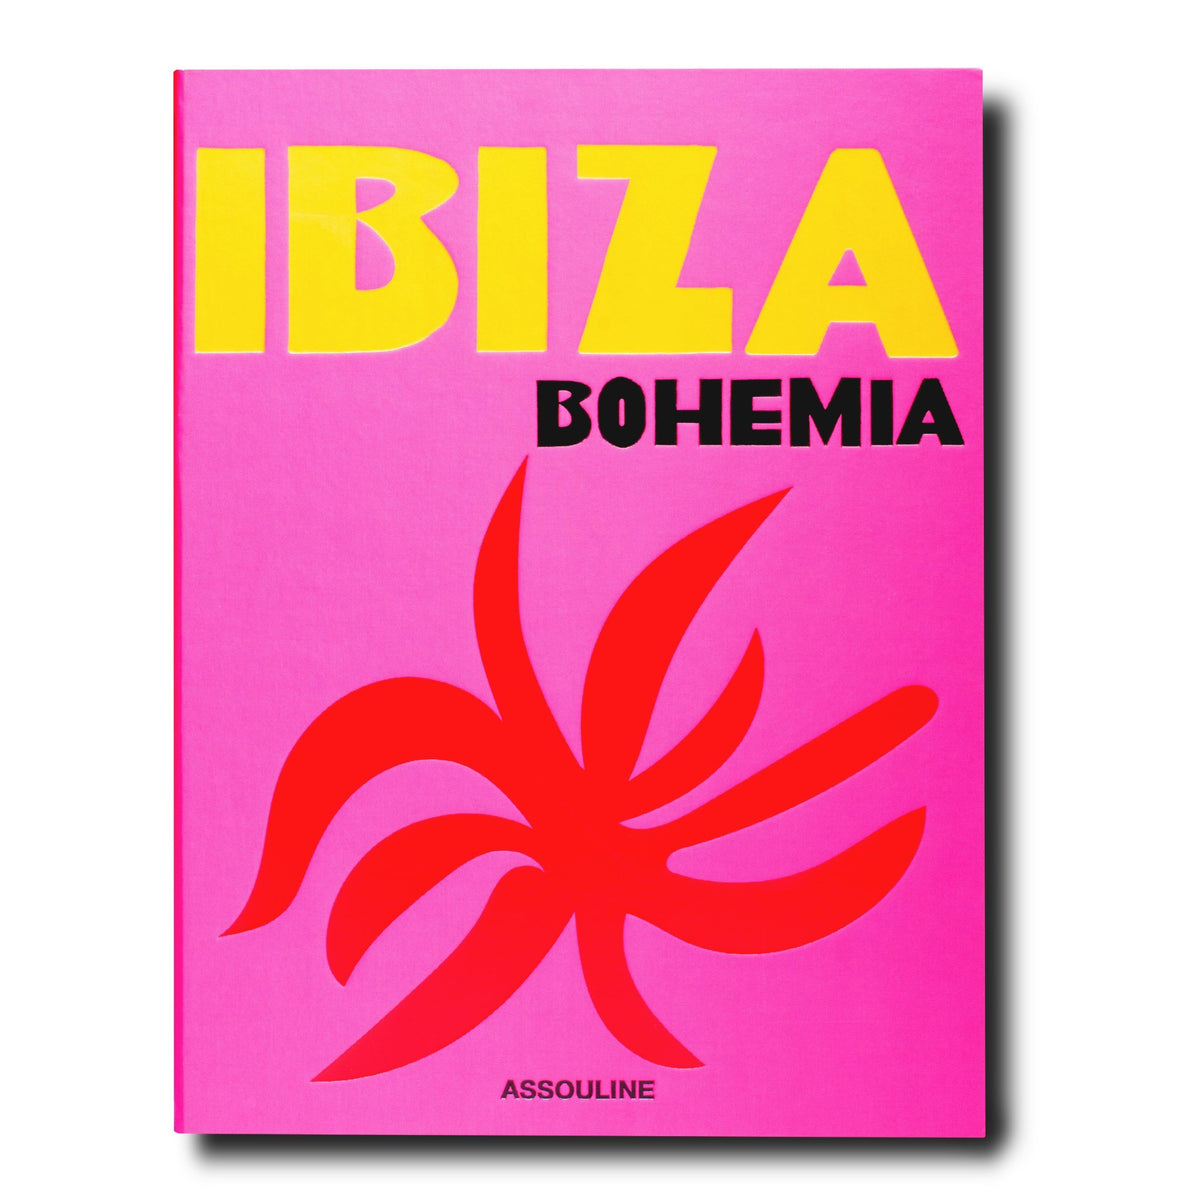 "Ibiza Bohemia"